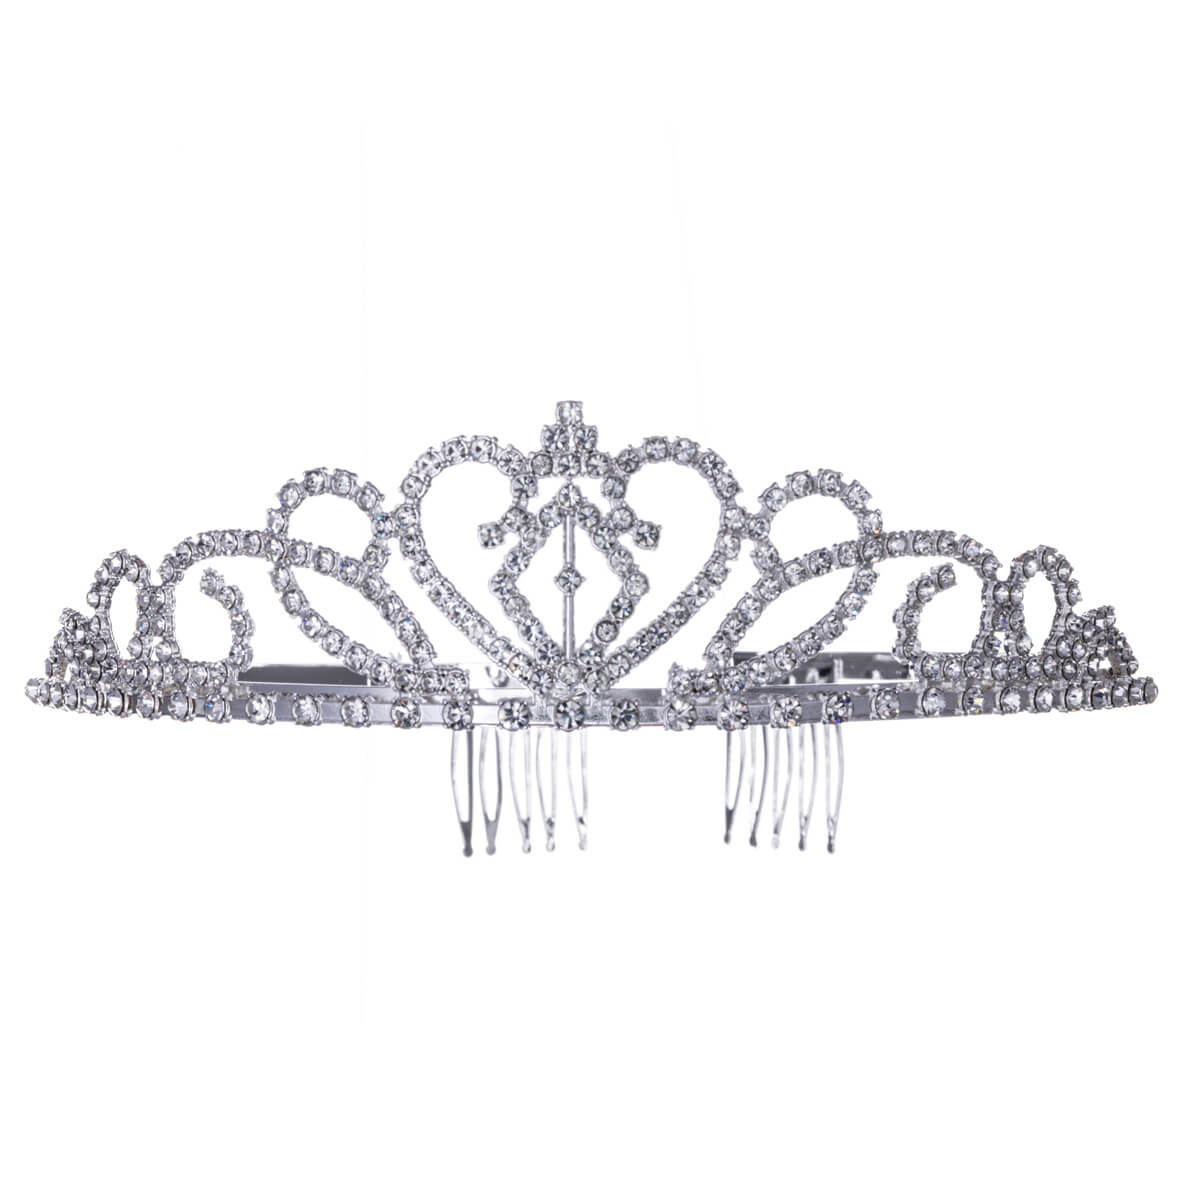 Decorated tiara tiara hairband